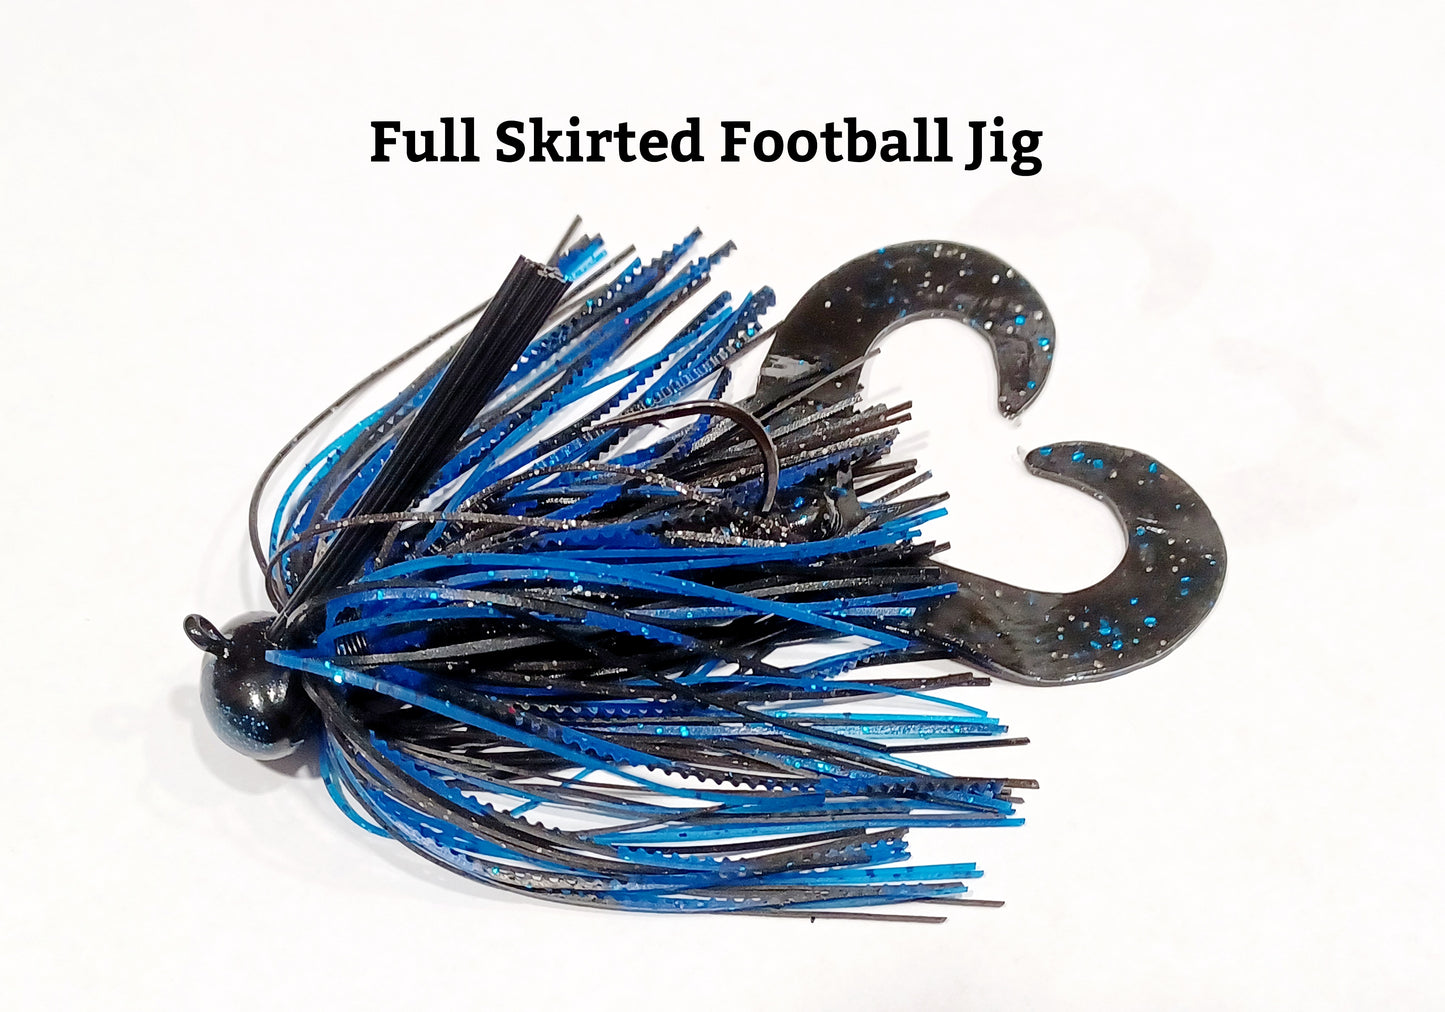 Custom CALI JIGS in black blue craw